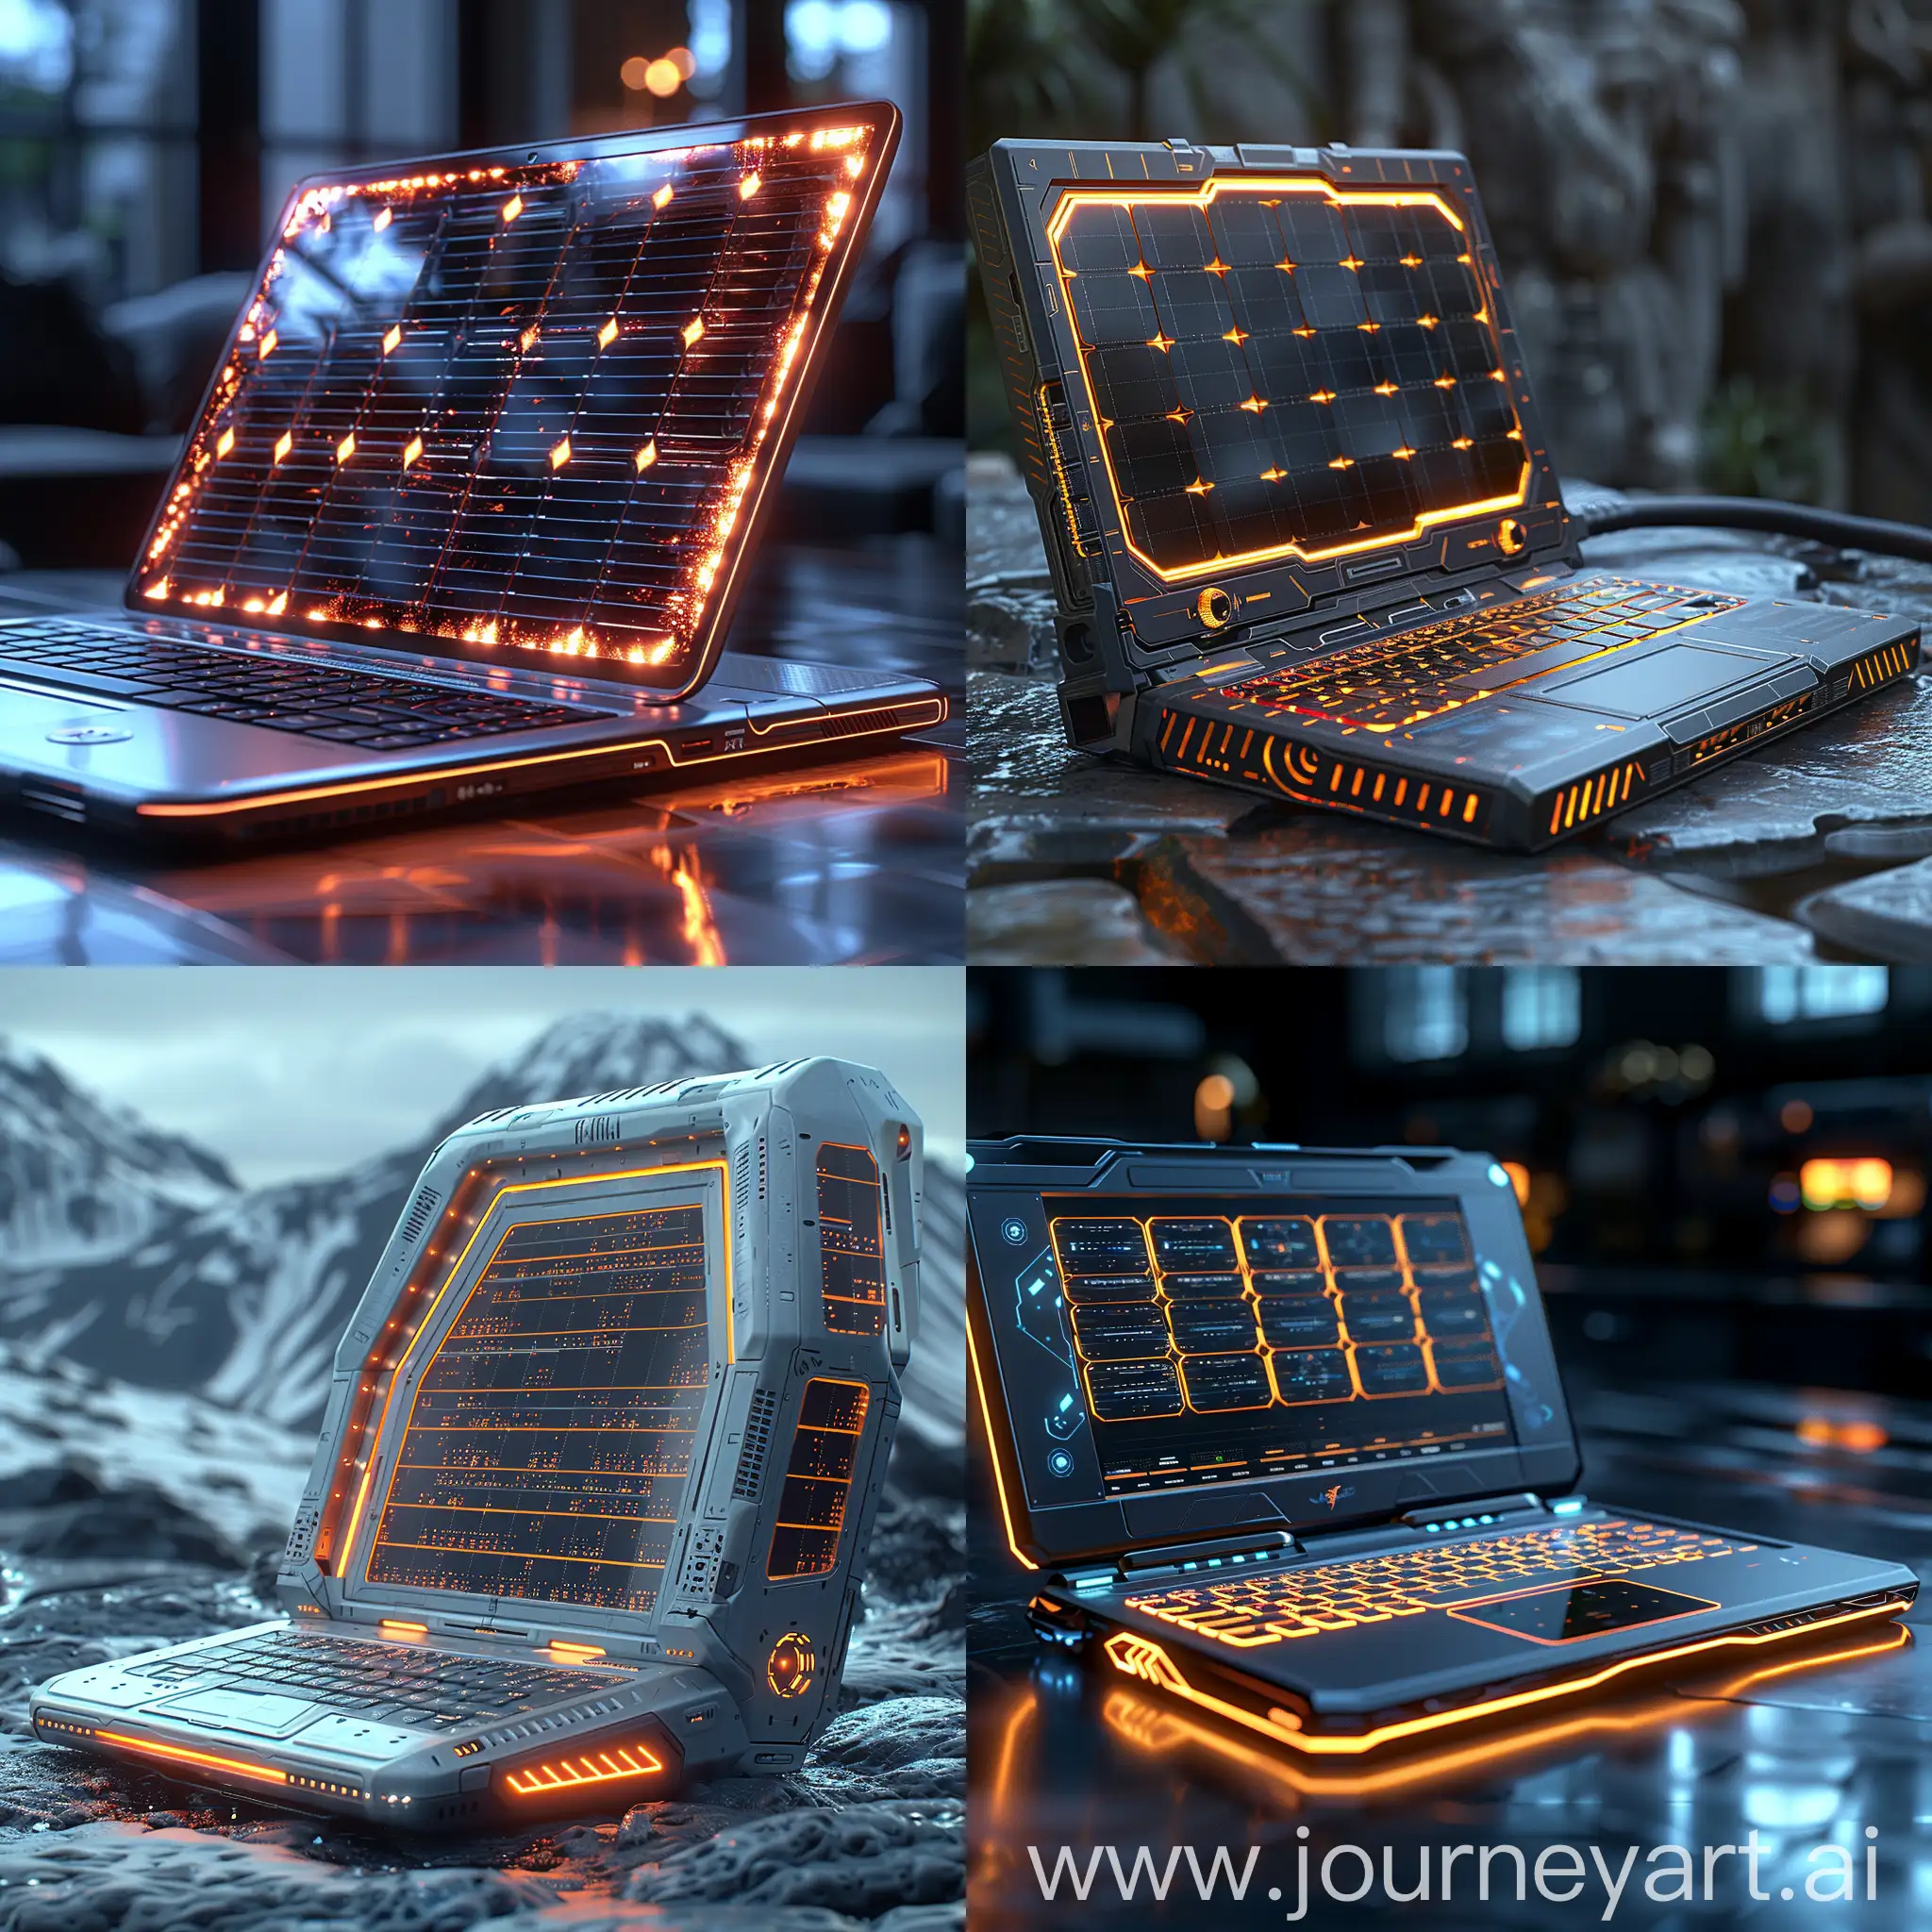 Futuristic-SolarPowered-Laptop-with-HighTech-Design